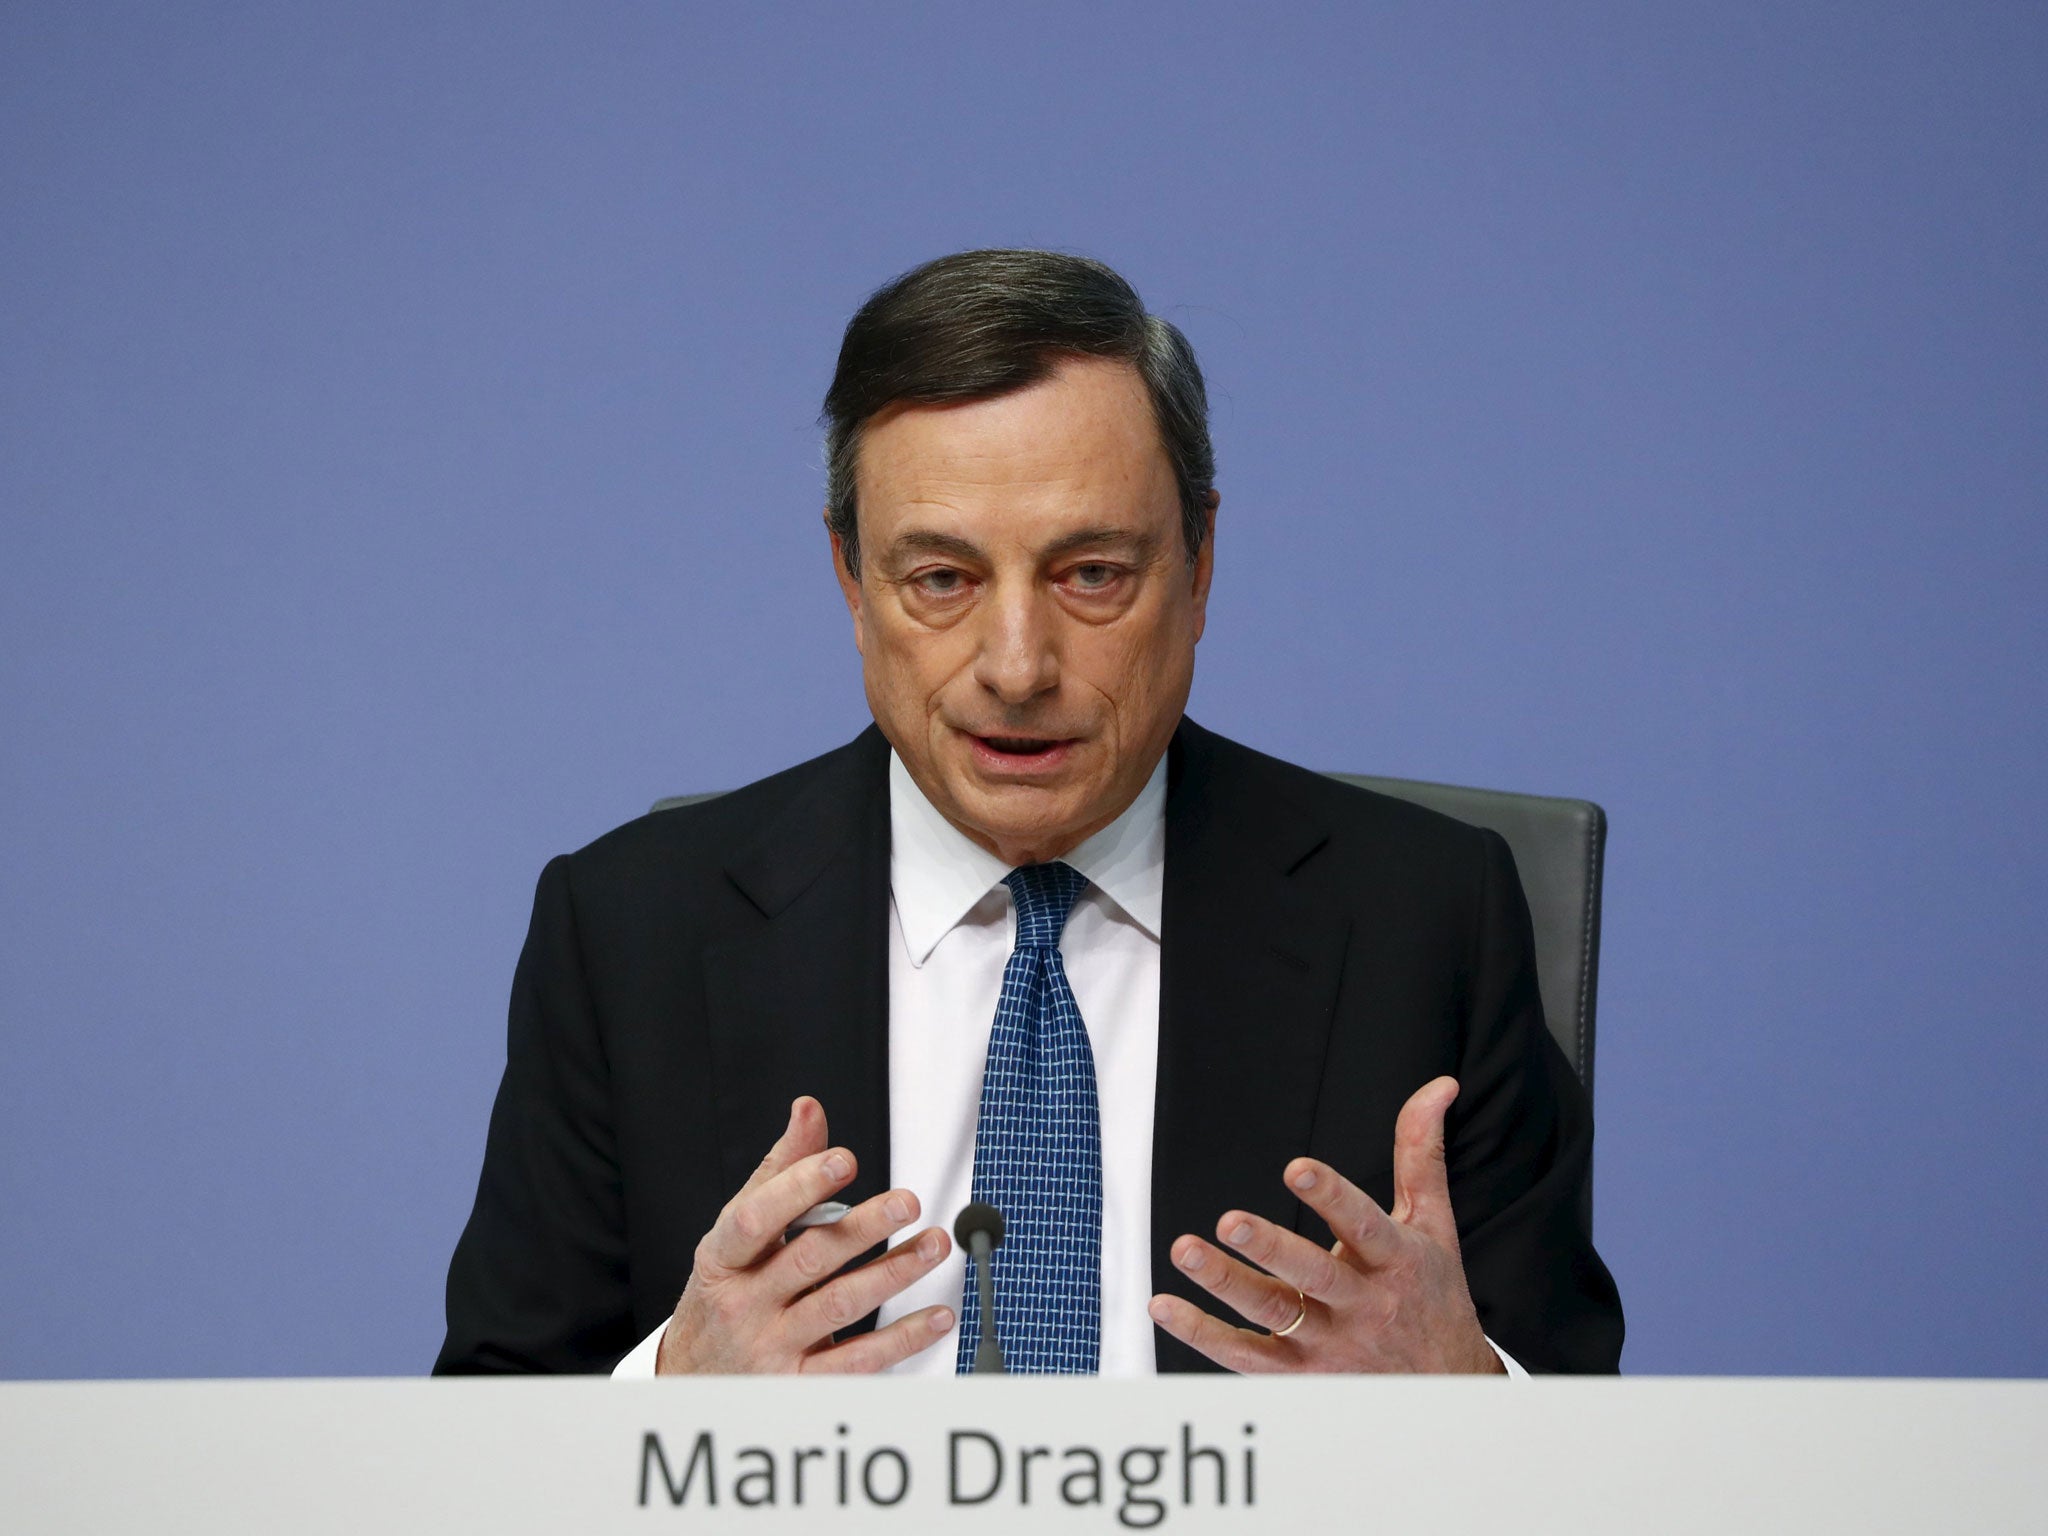 No threat: the ECB president